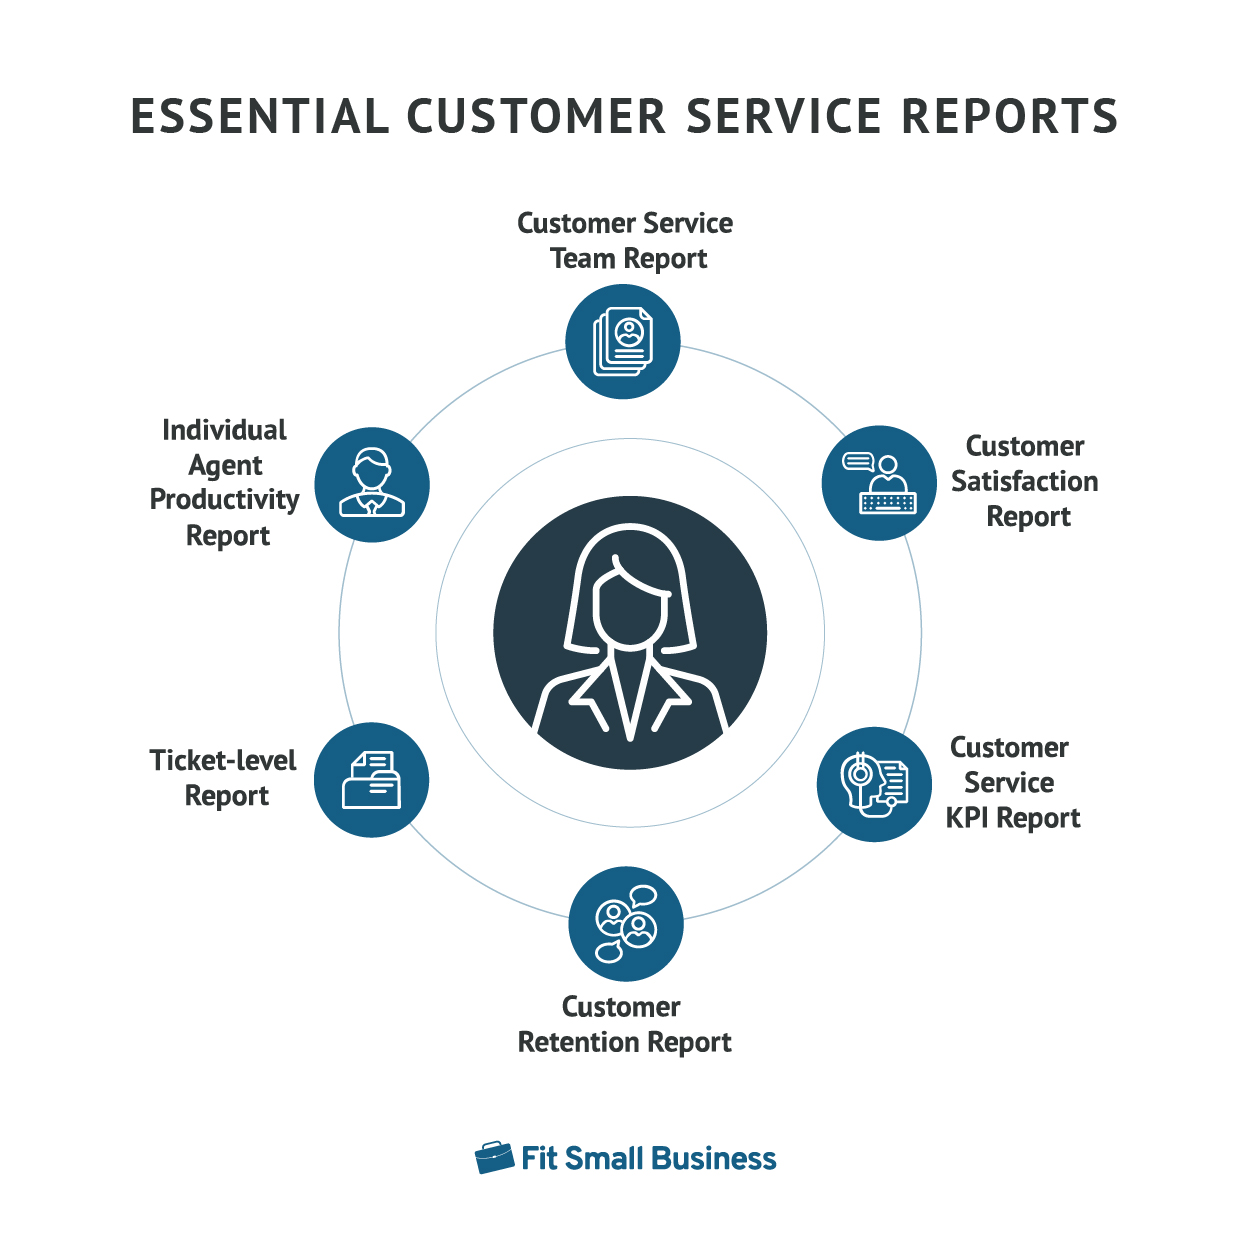 Essential customer service reports